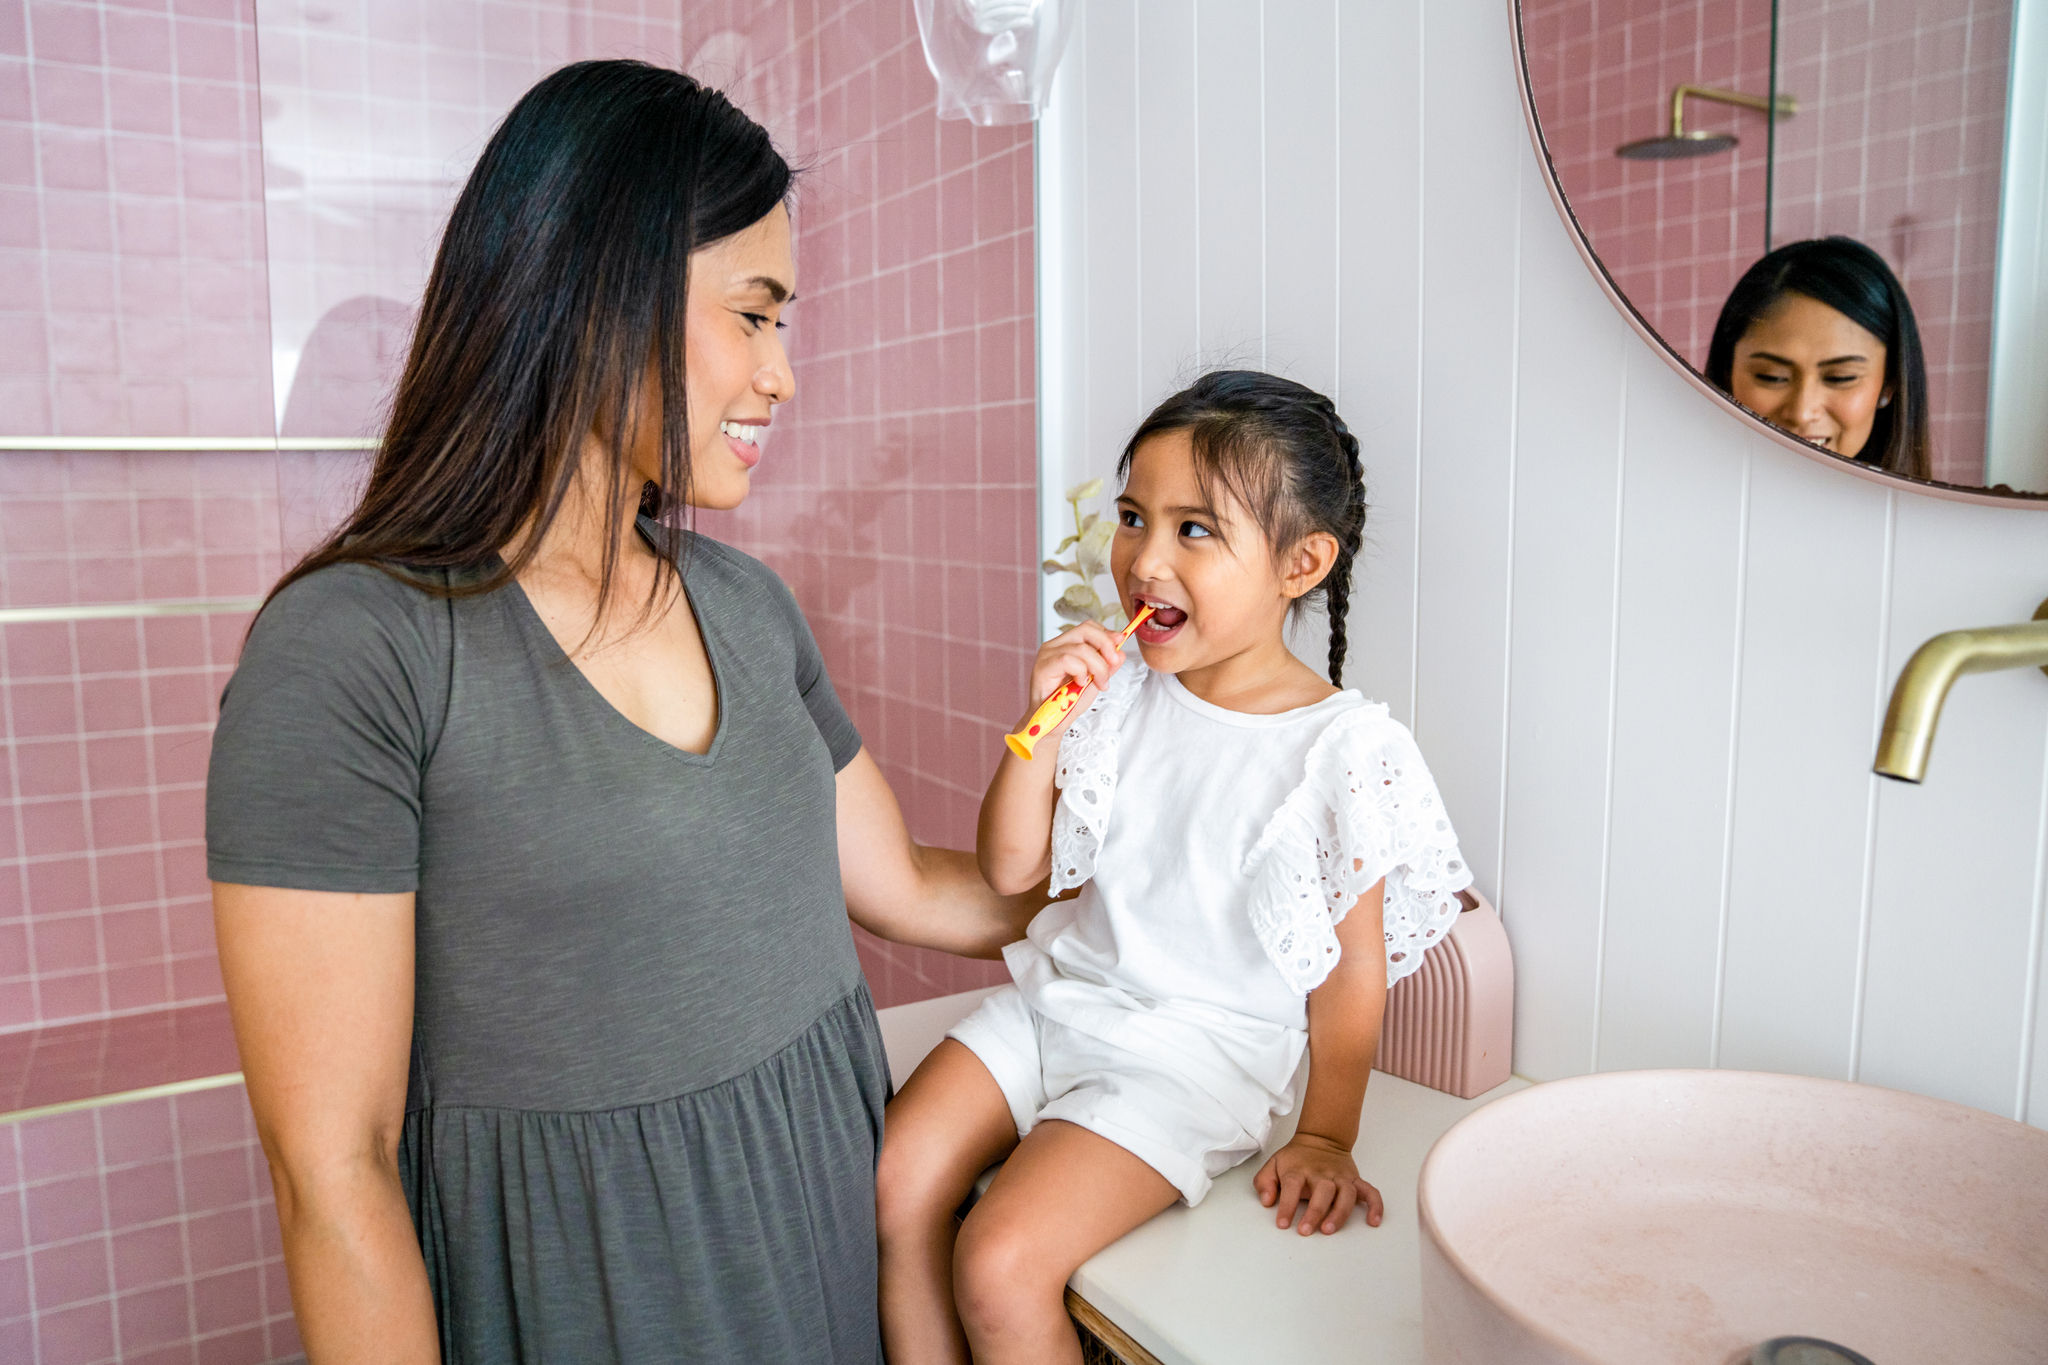 Baby teeth growth: Child brushing teeth